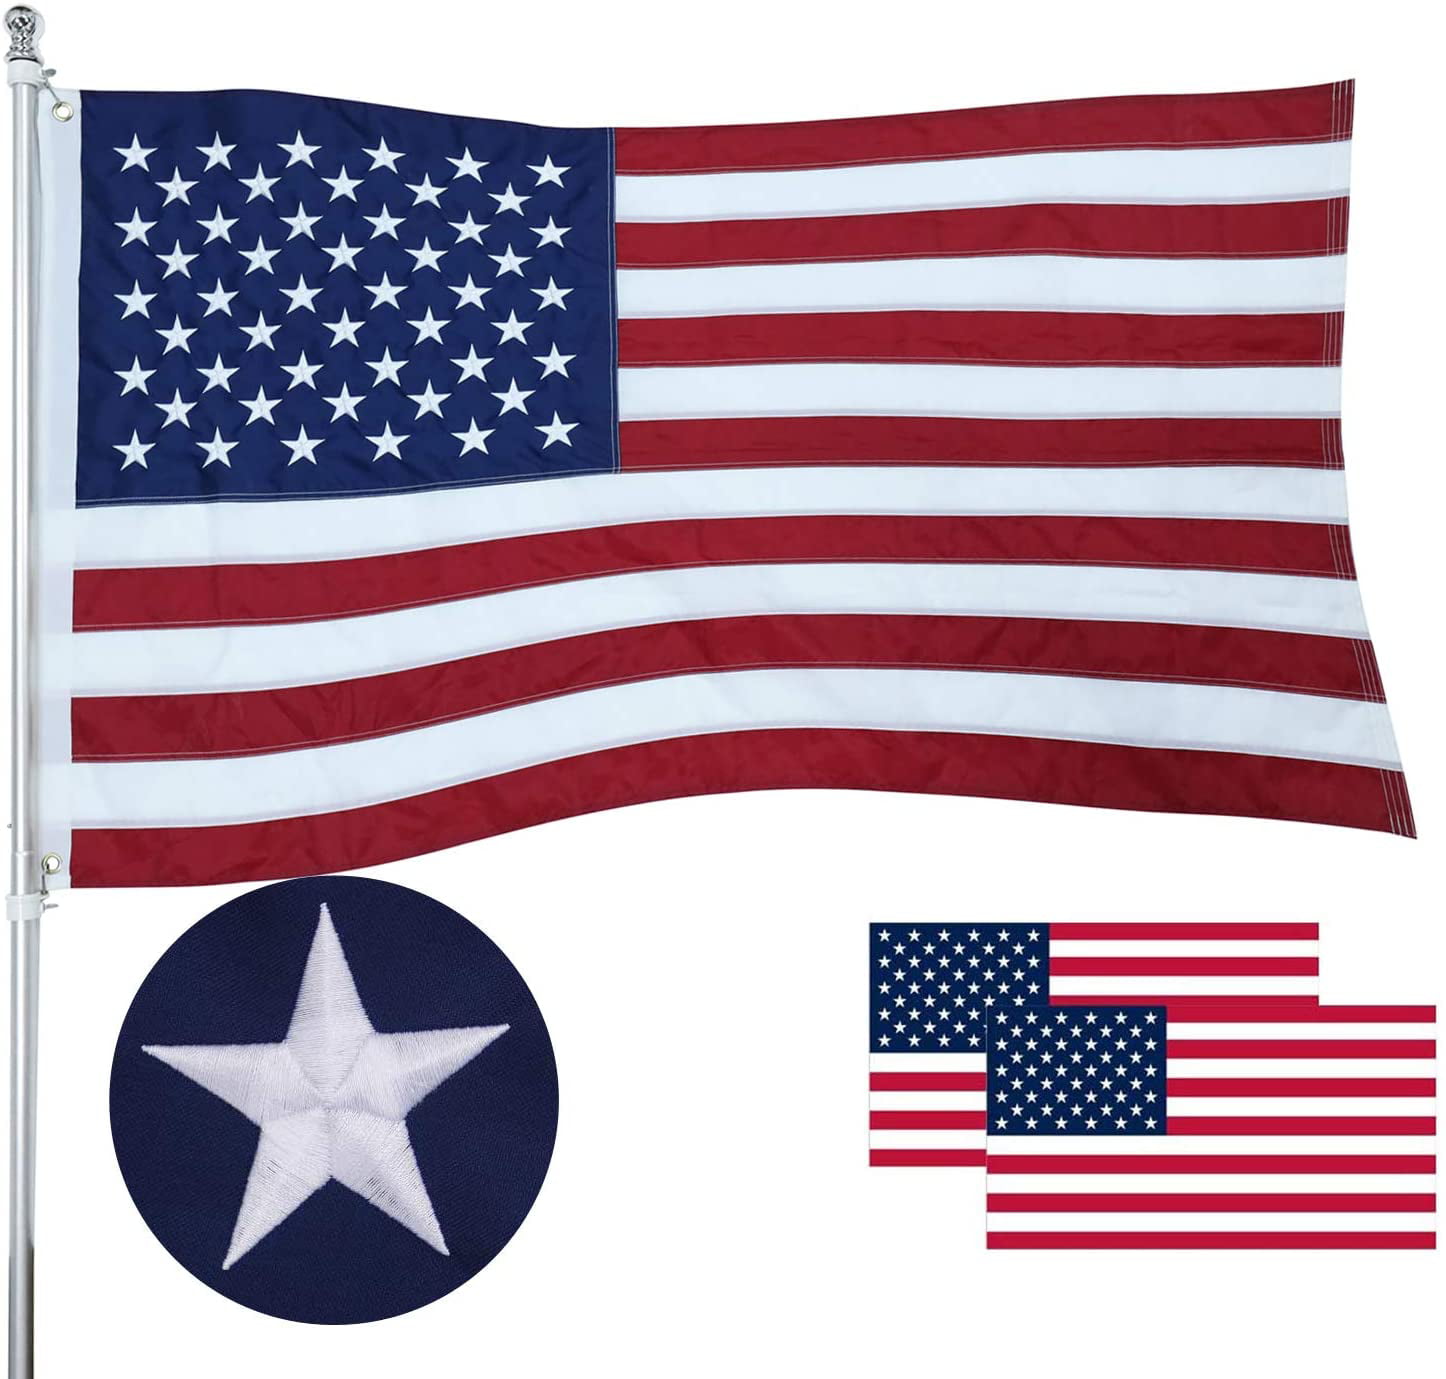 US MARINES FLAG UNITED STATES MILITARY FLAGS Size 5x3 Feet 